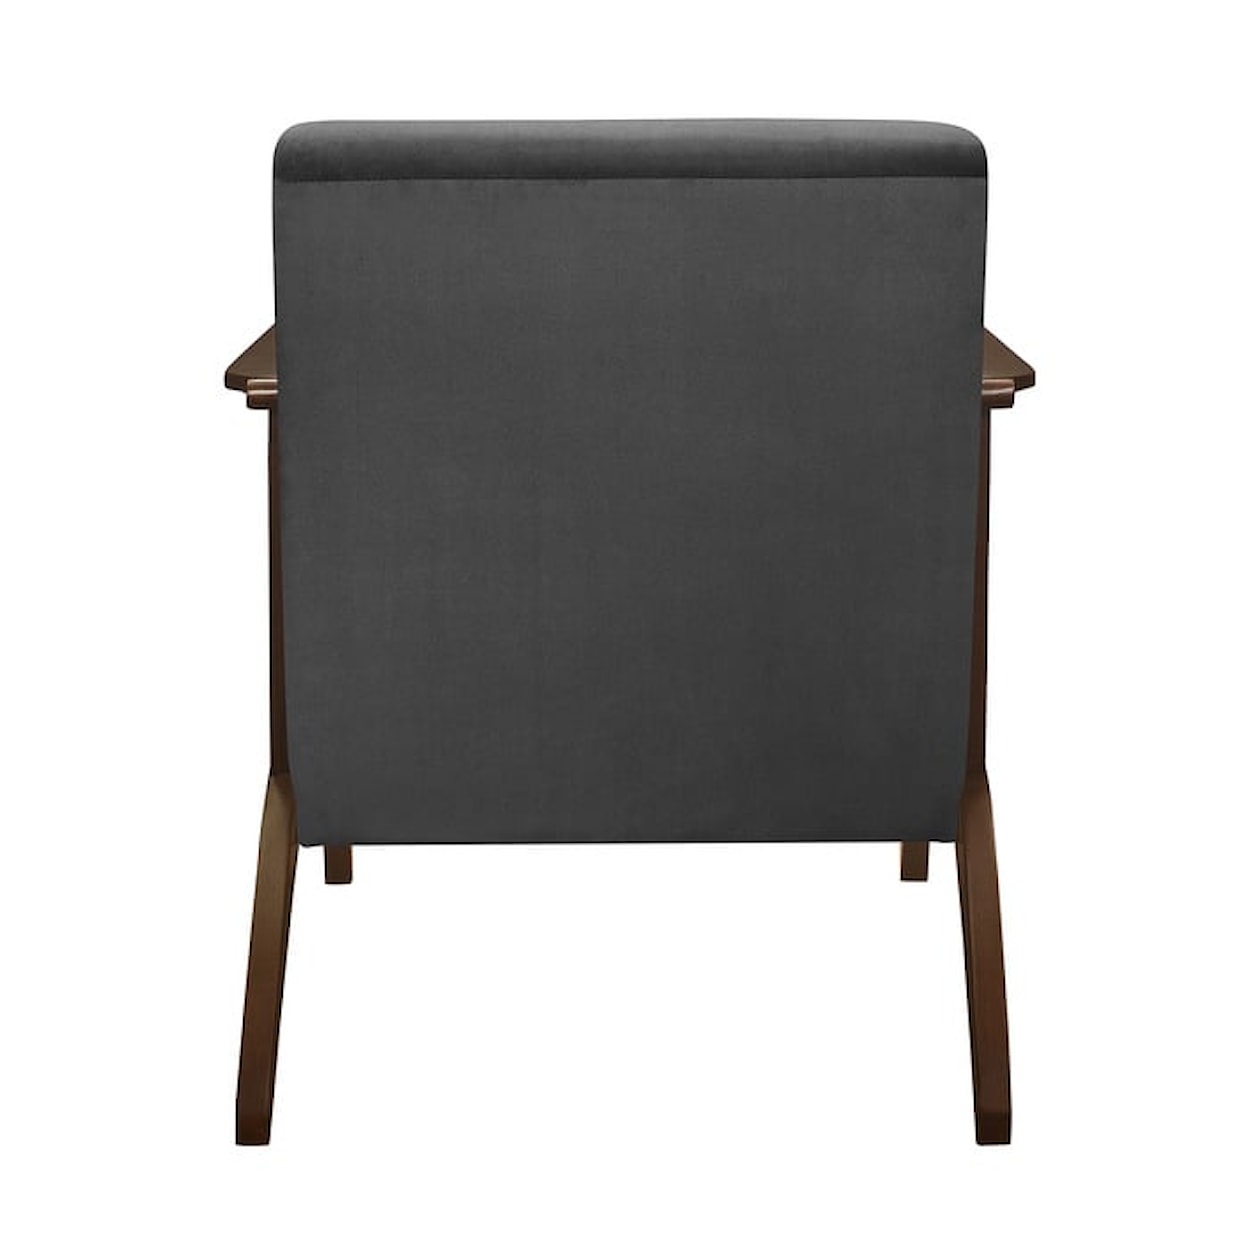 Homelegance Furniture Carlson Accent Chair